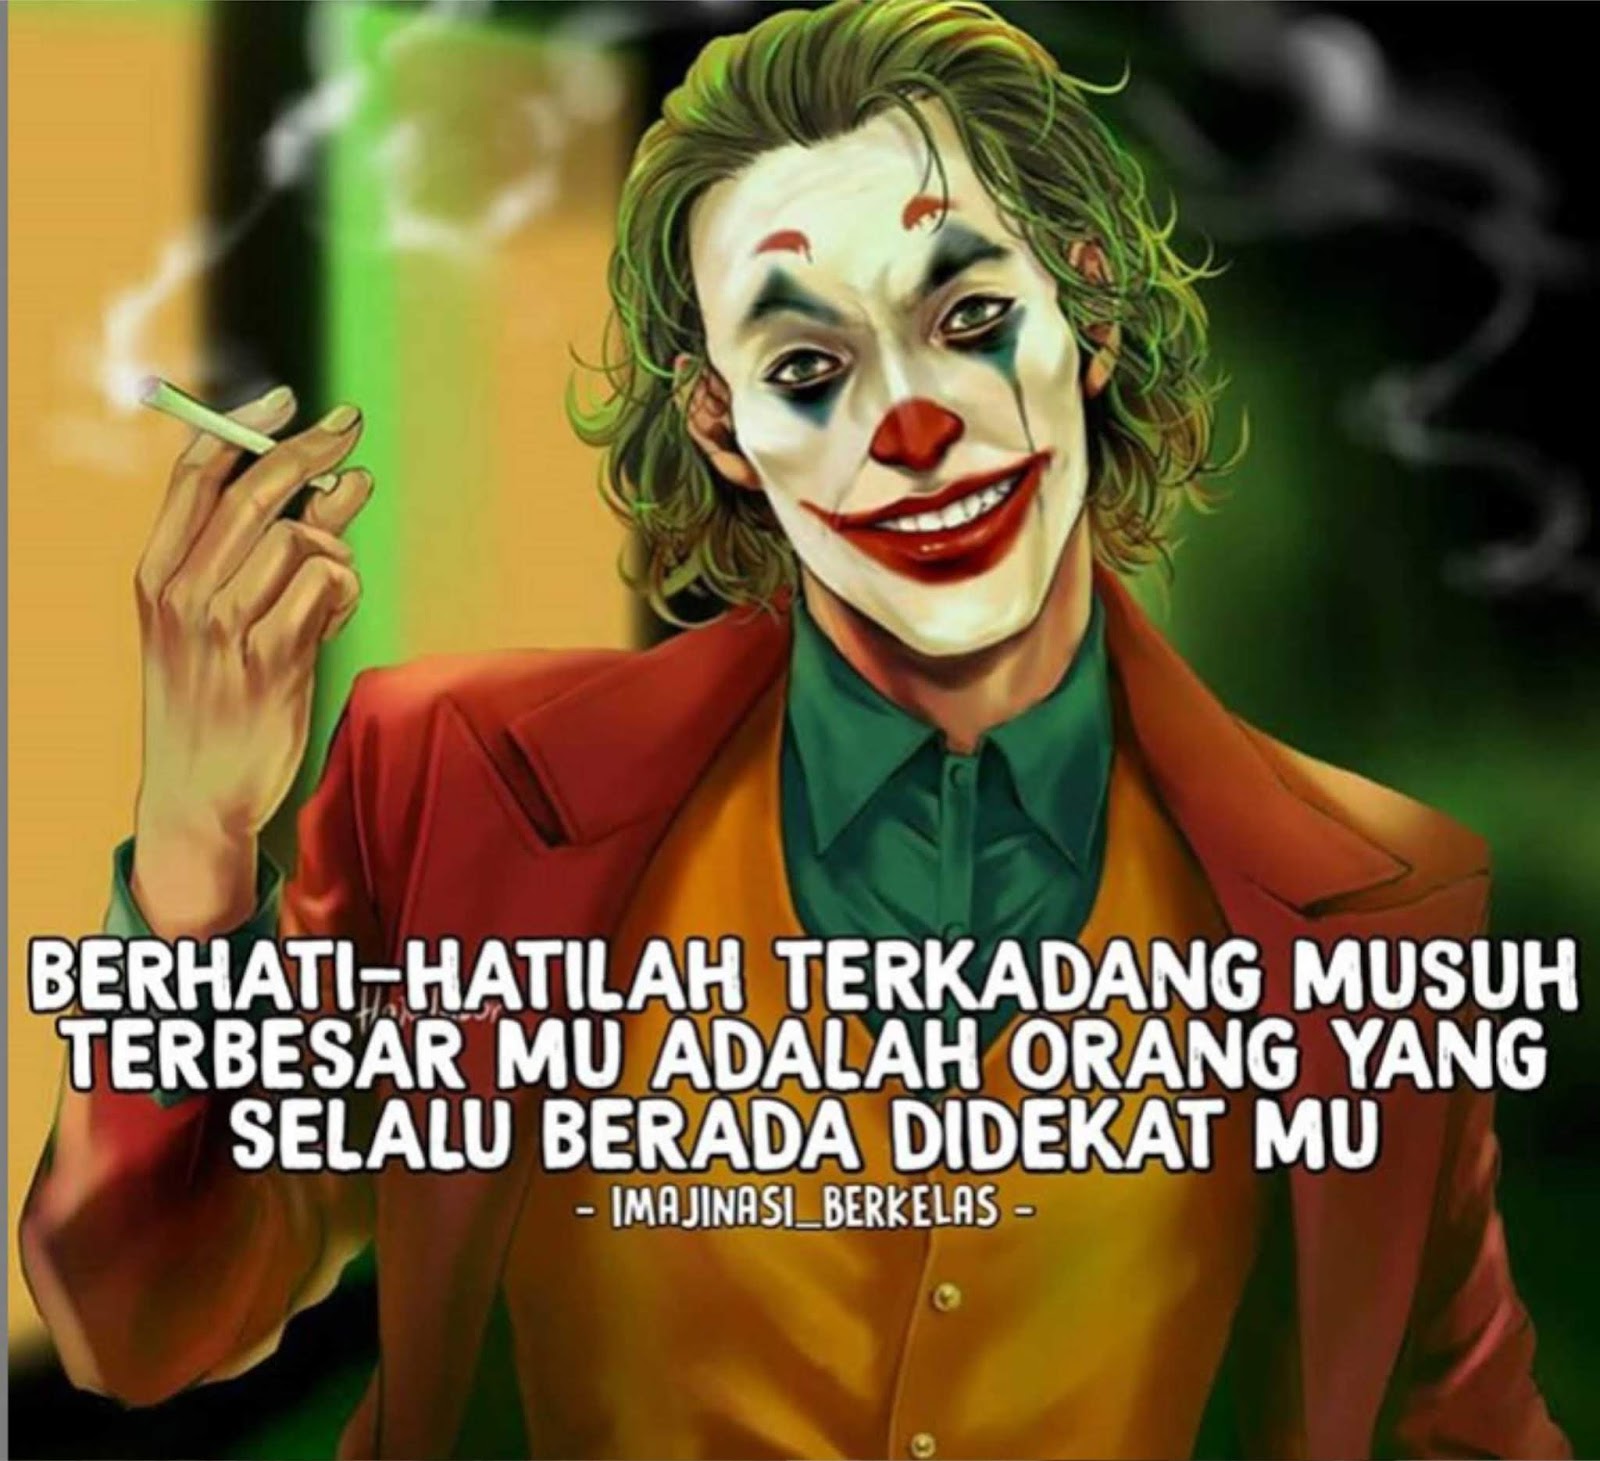 35 Gambar Meme Joker Dengan Kata2 Bijak Yang Keren Gambar Lucu